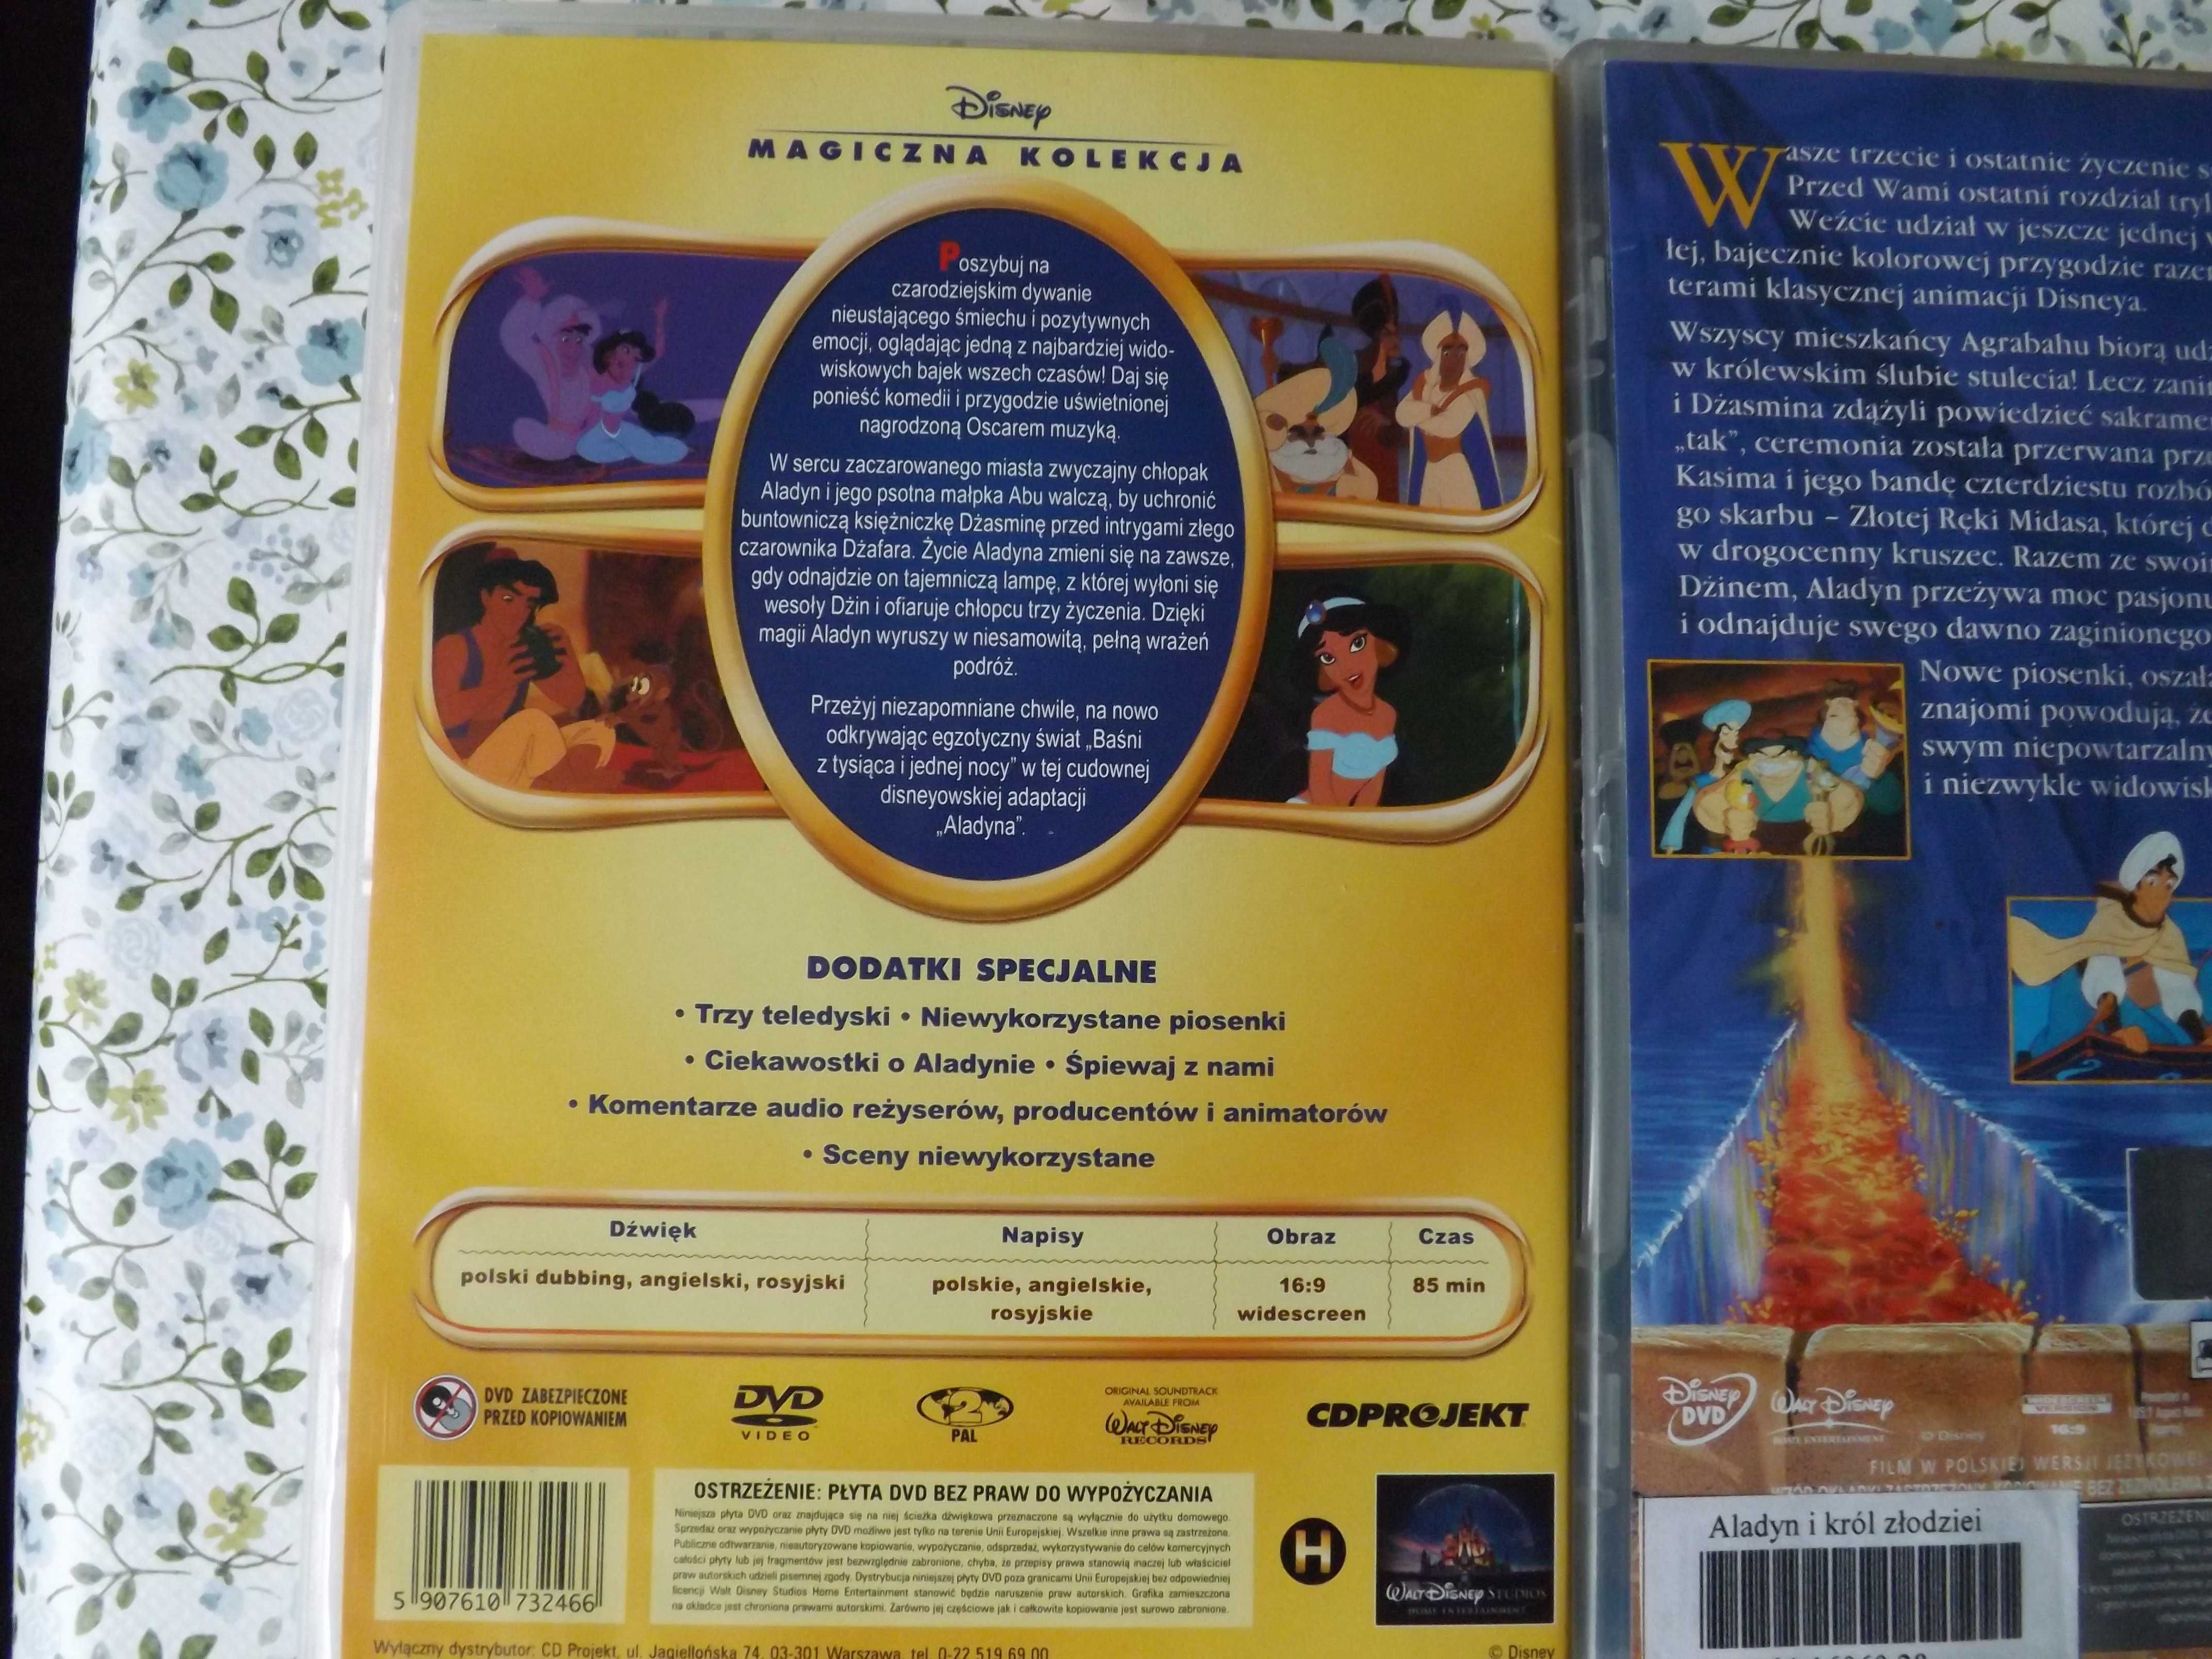 Alladyn kolekcja 3 bajek Disneya klasyka film